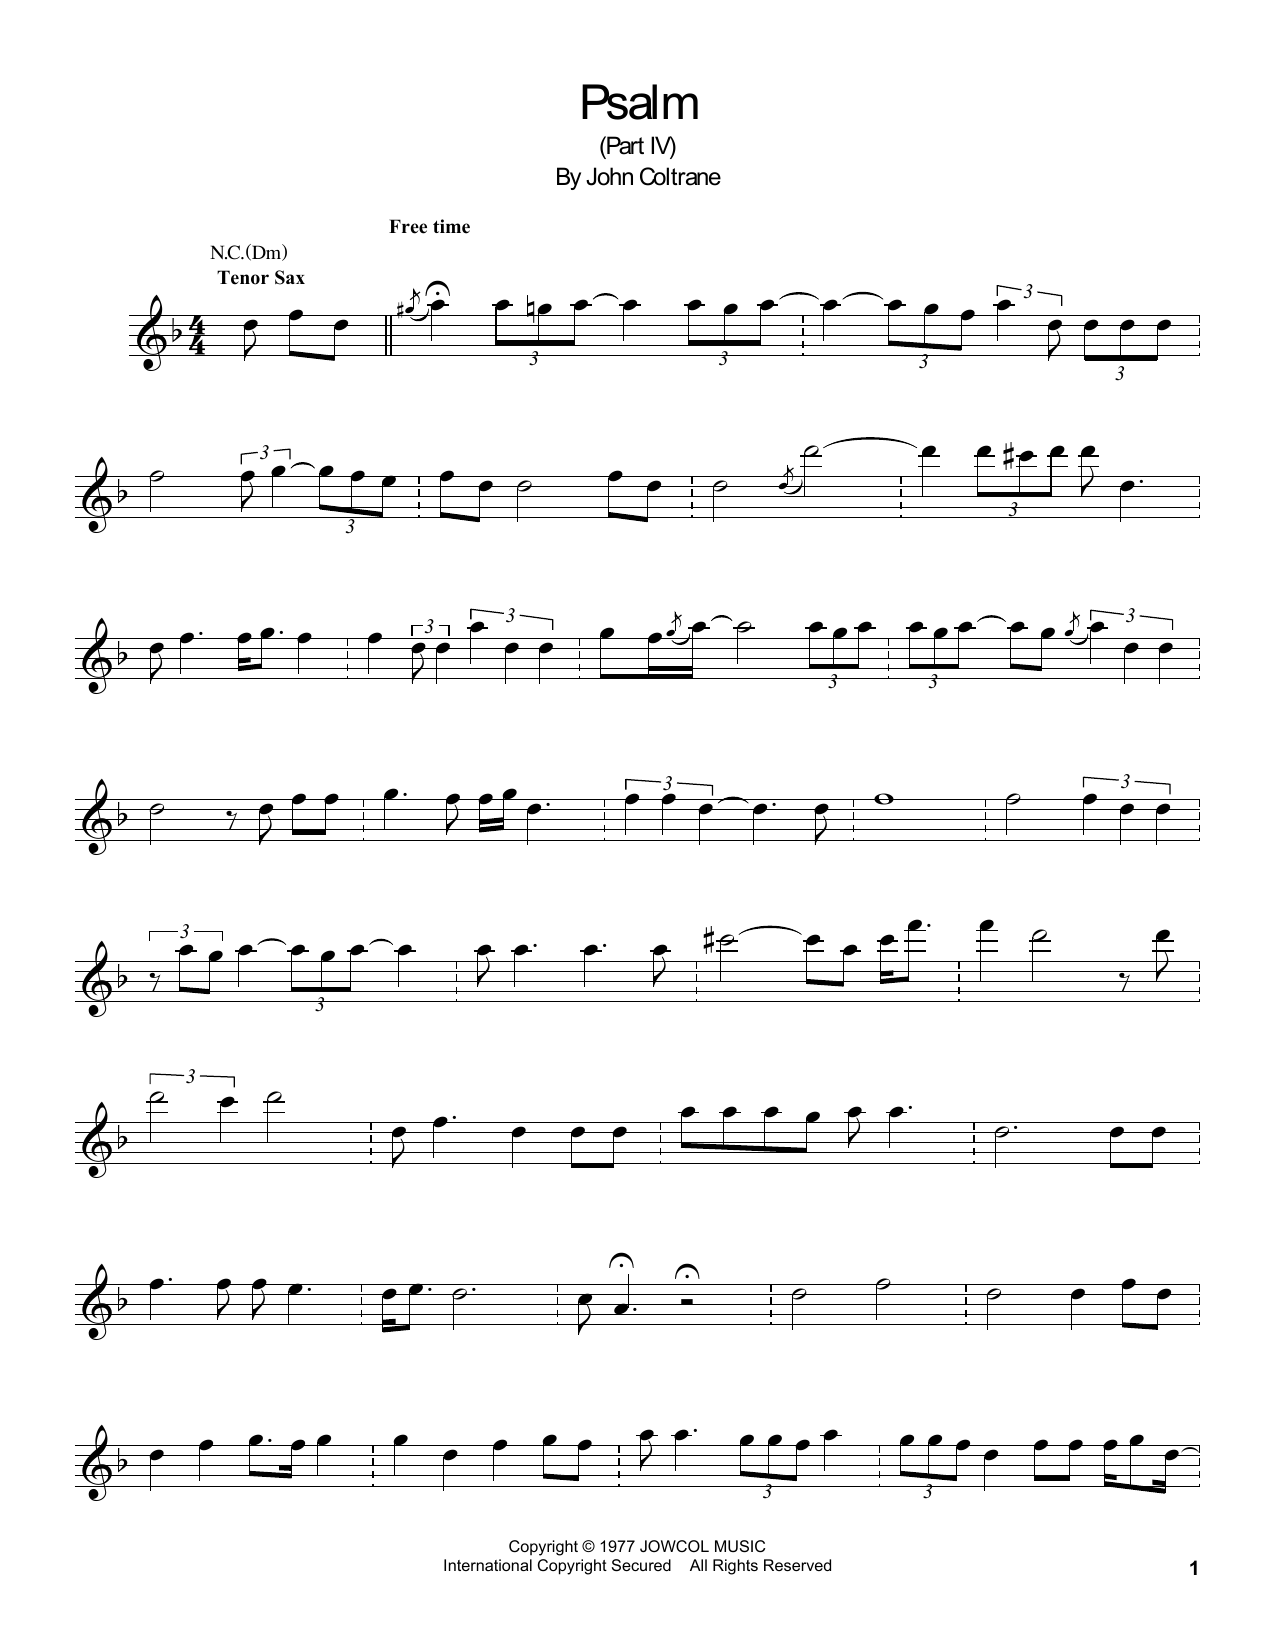 John Coltrane Psalm Sheet Music Notes & Chords for Tenor Sax Transcription - Download or Print PDF